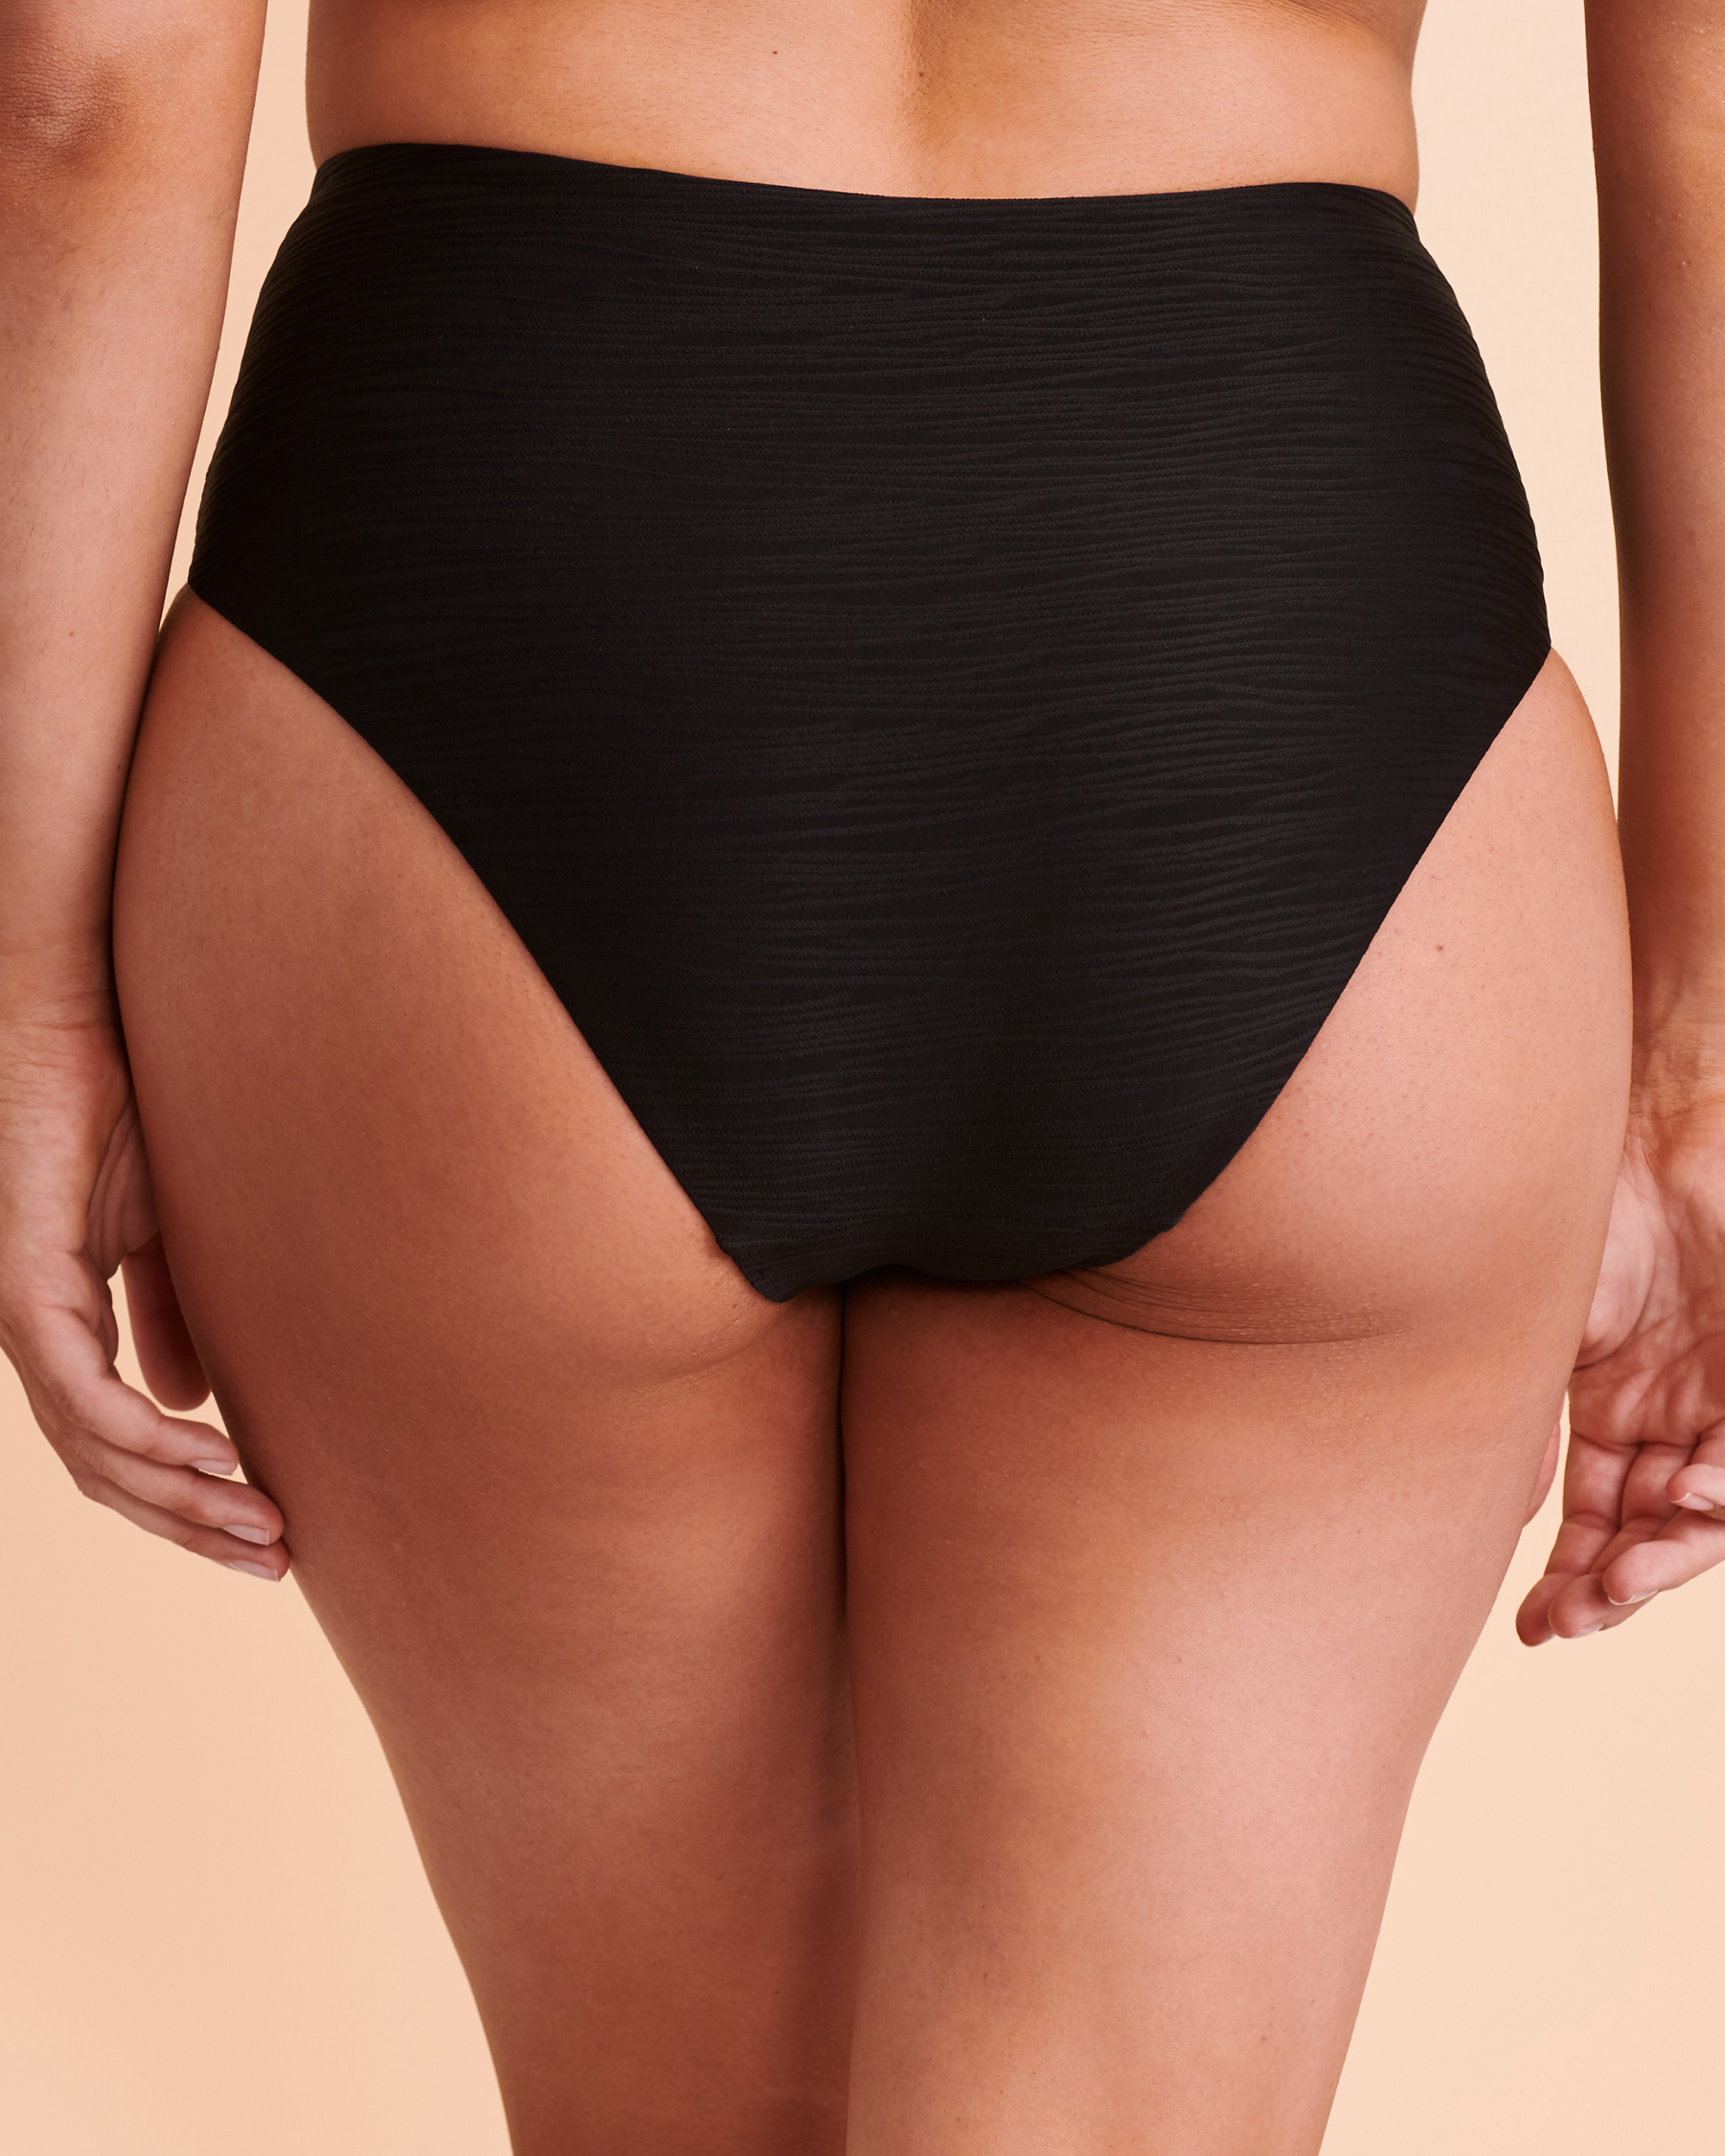 SANTEMARE TEXTURED High Waist Bikini Bottom Black 01300133 - View2